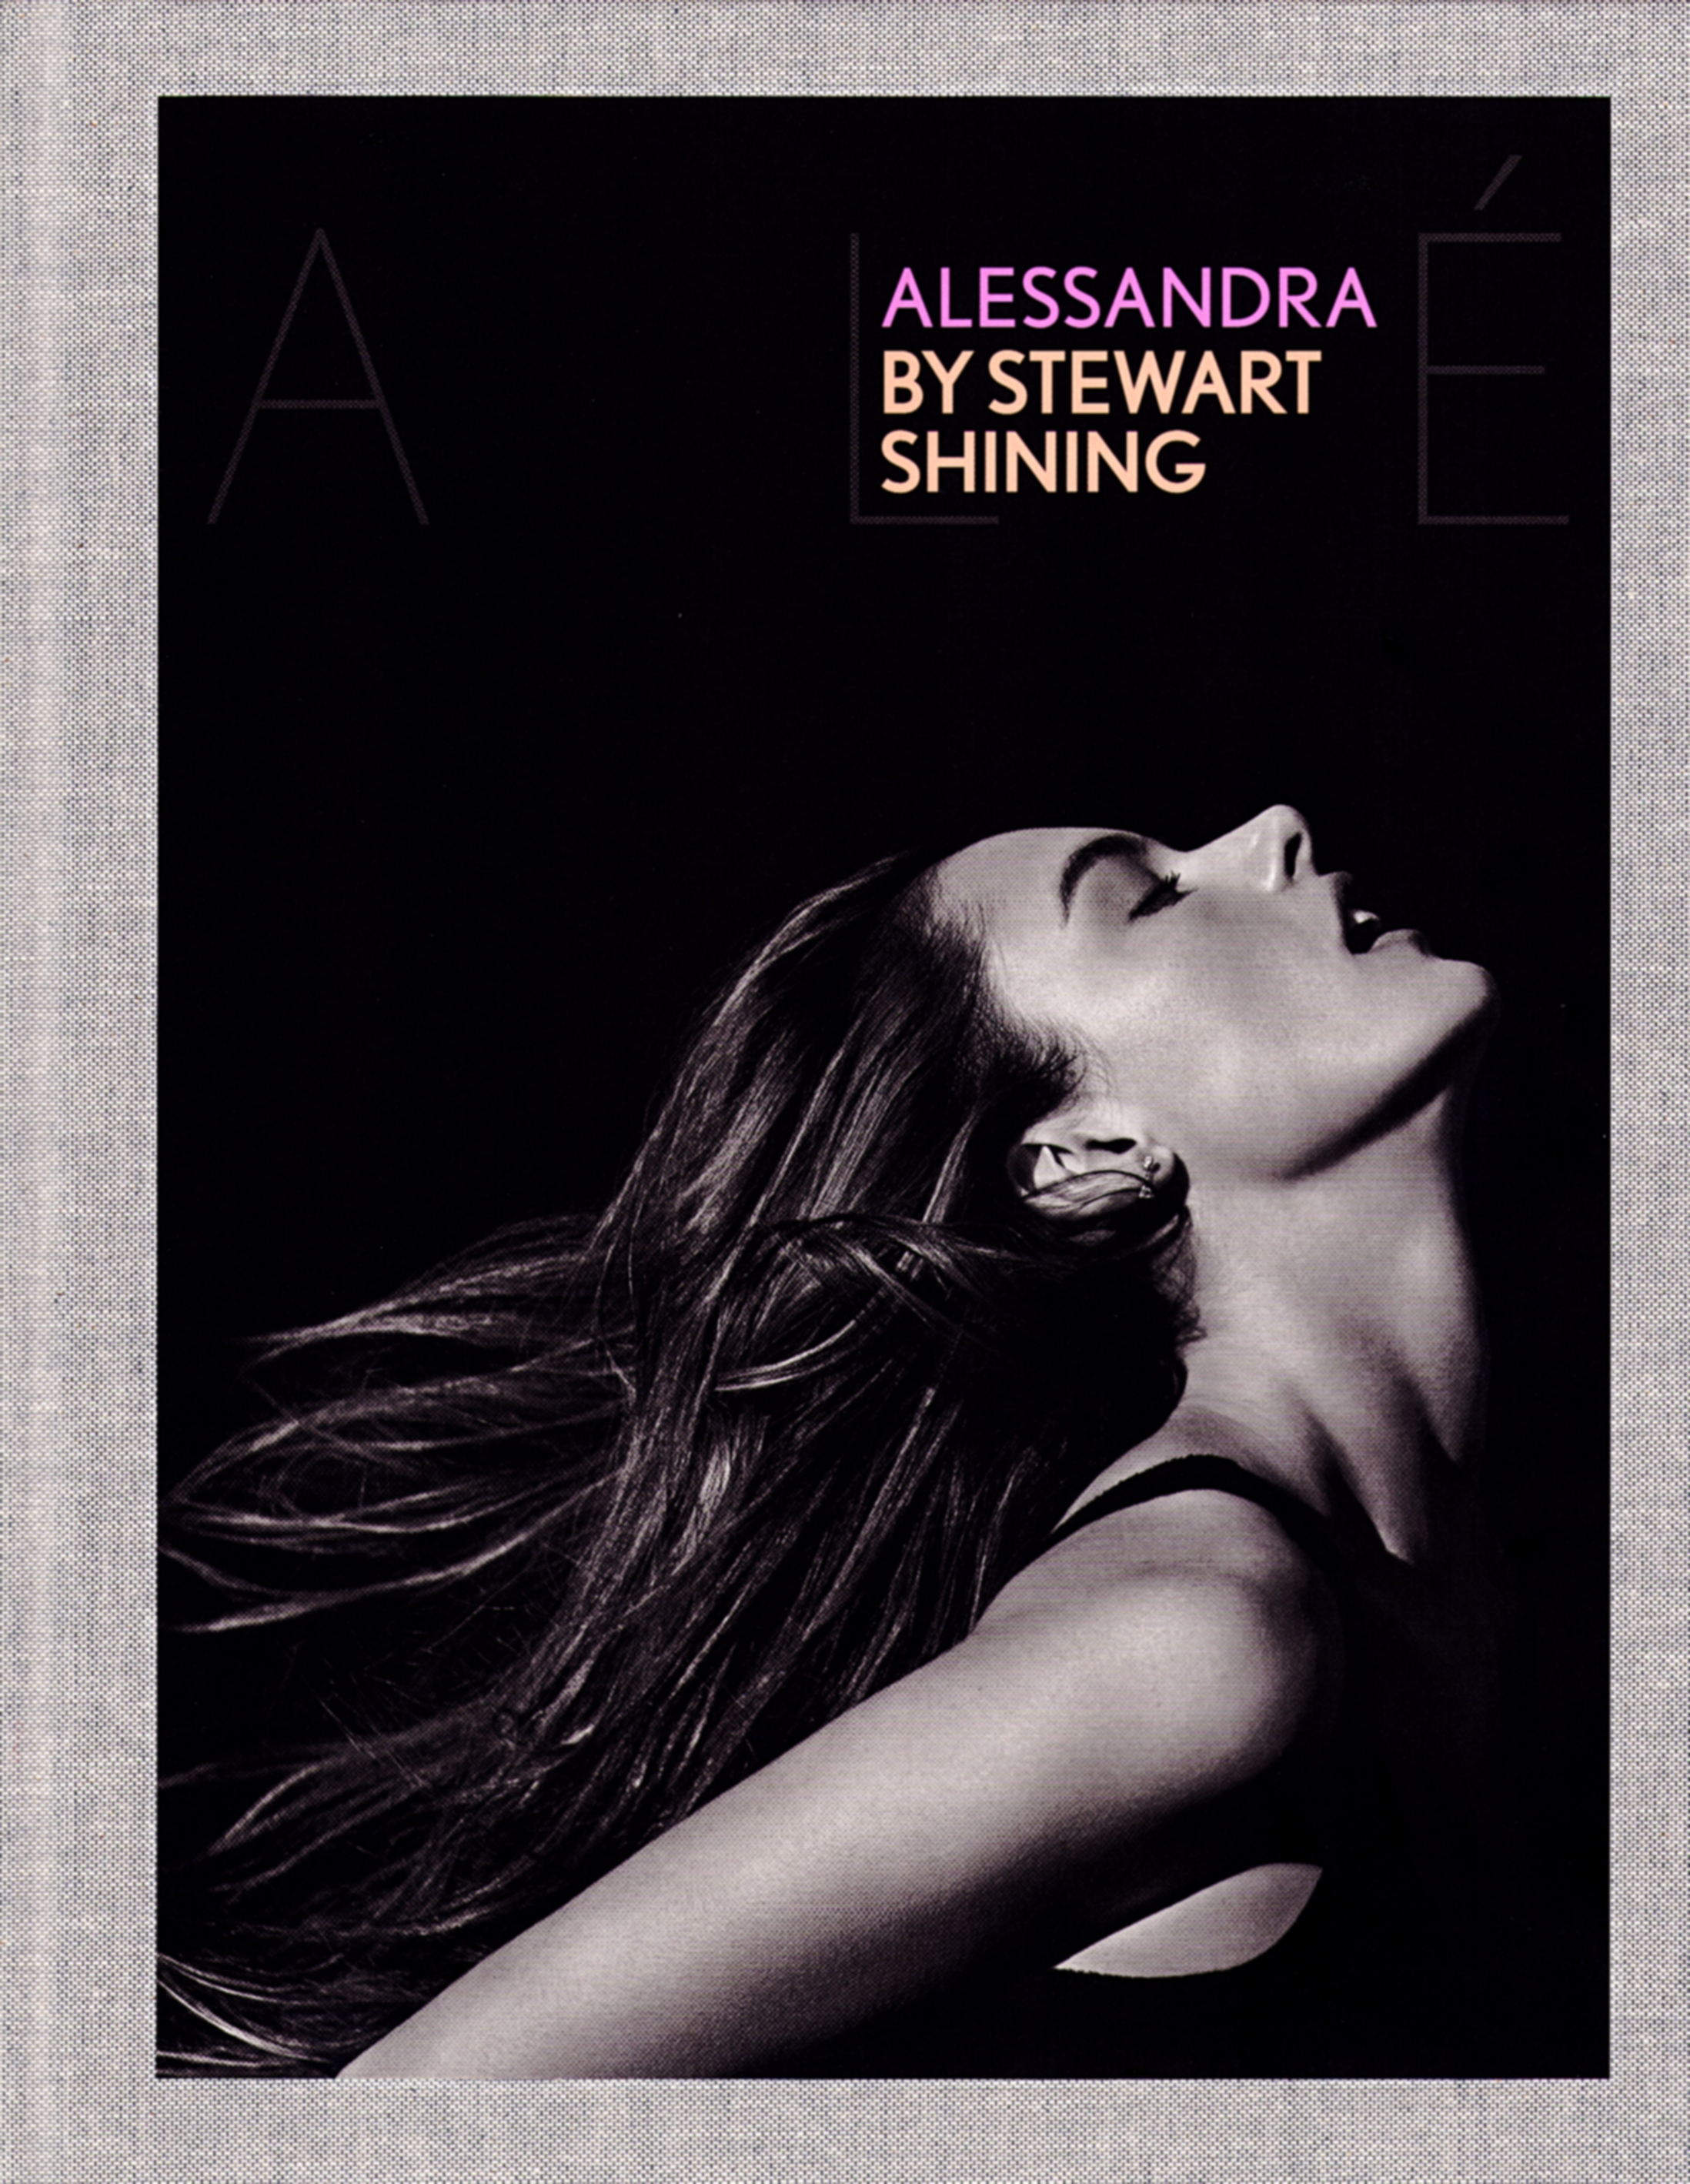 Alessandra Ambrosio -- SCANMQ = Alessandra By Stewart Shinning P1 01.jpg